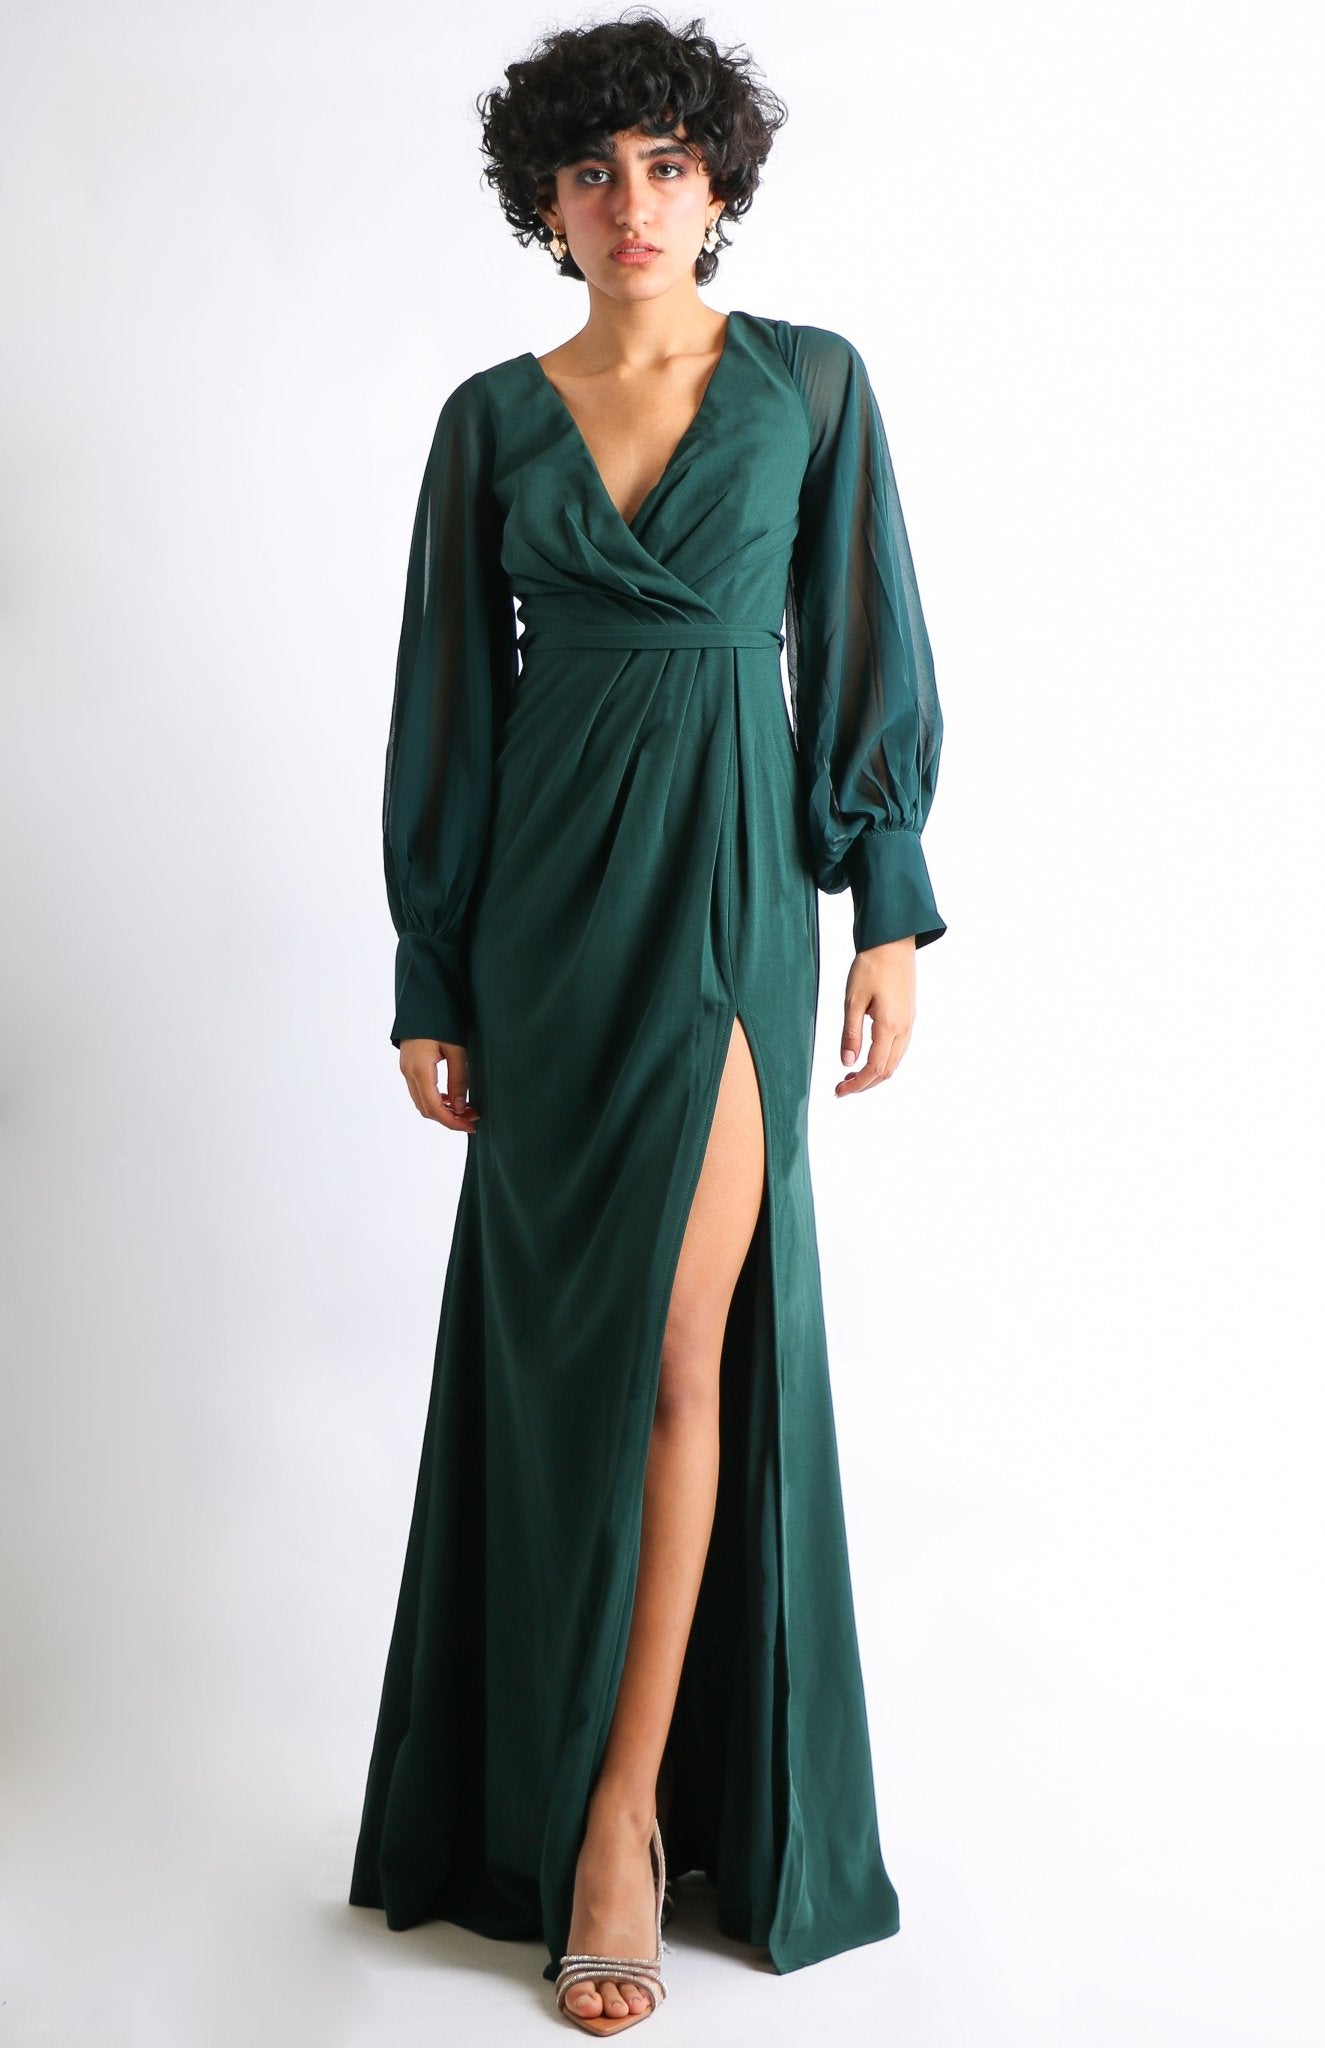 Overy - verde - Cindel vestidos maxi, midi, mini, para toda ocasion, largos, de fiesta, de boda